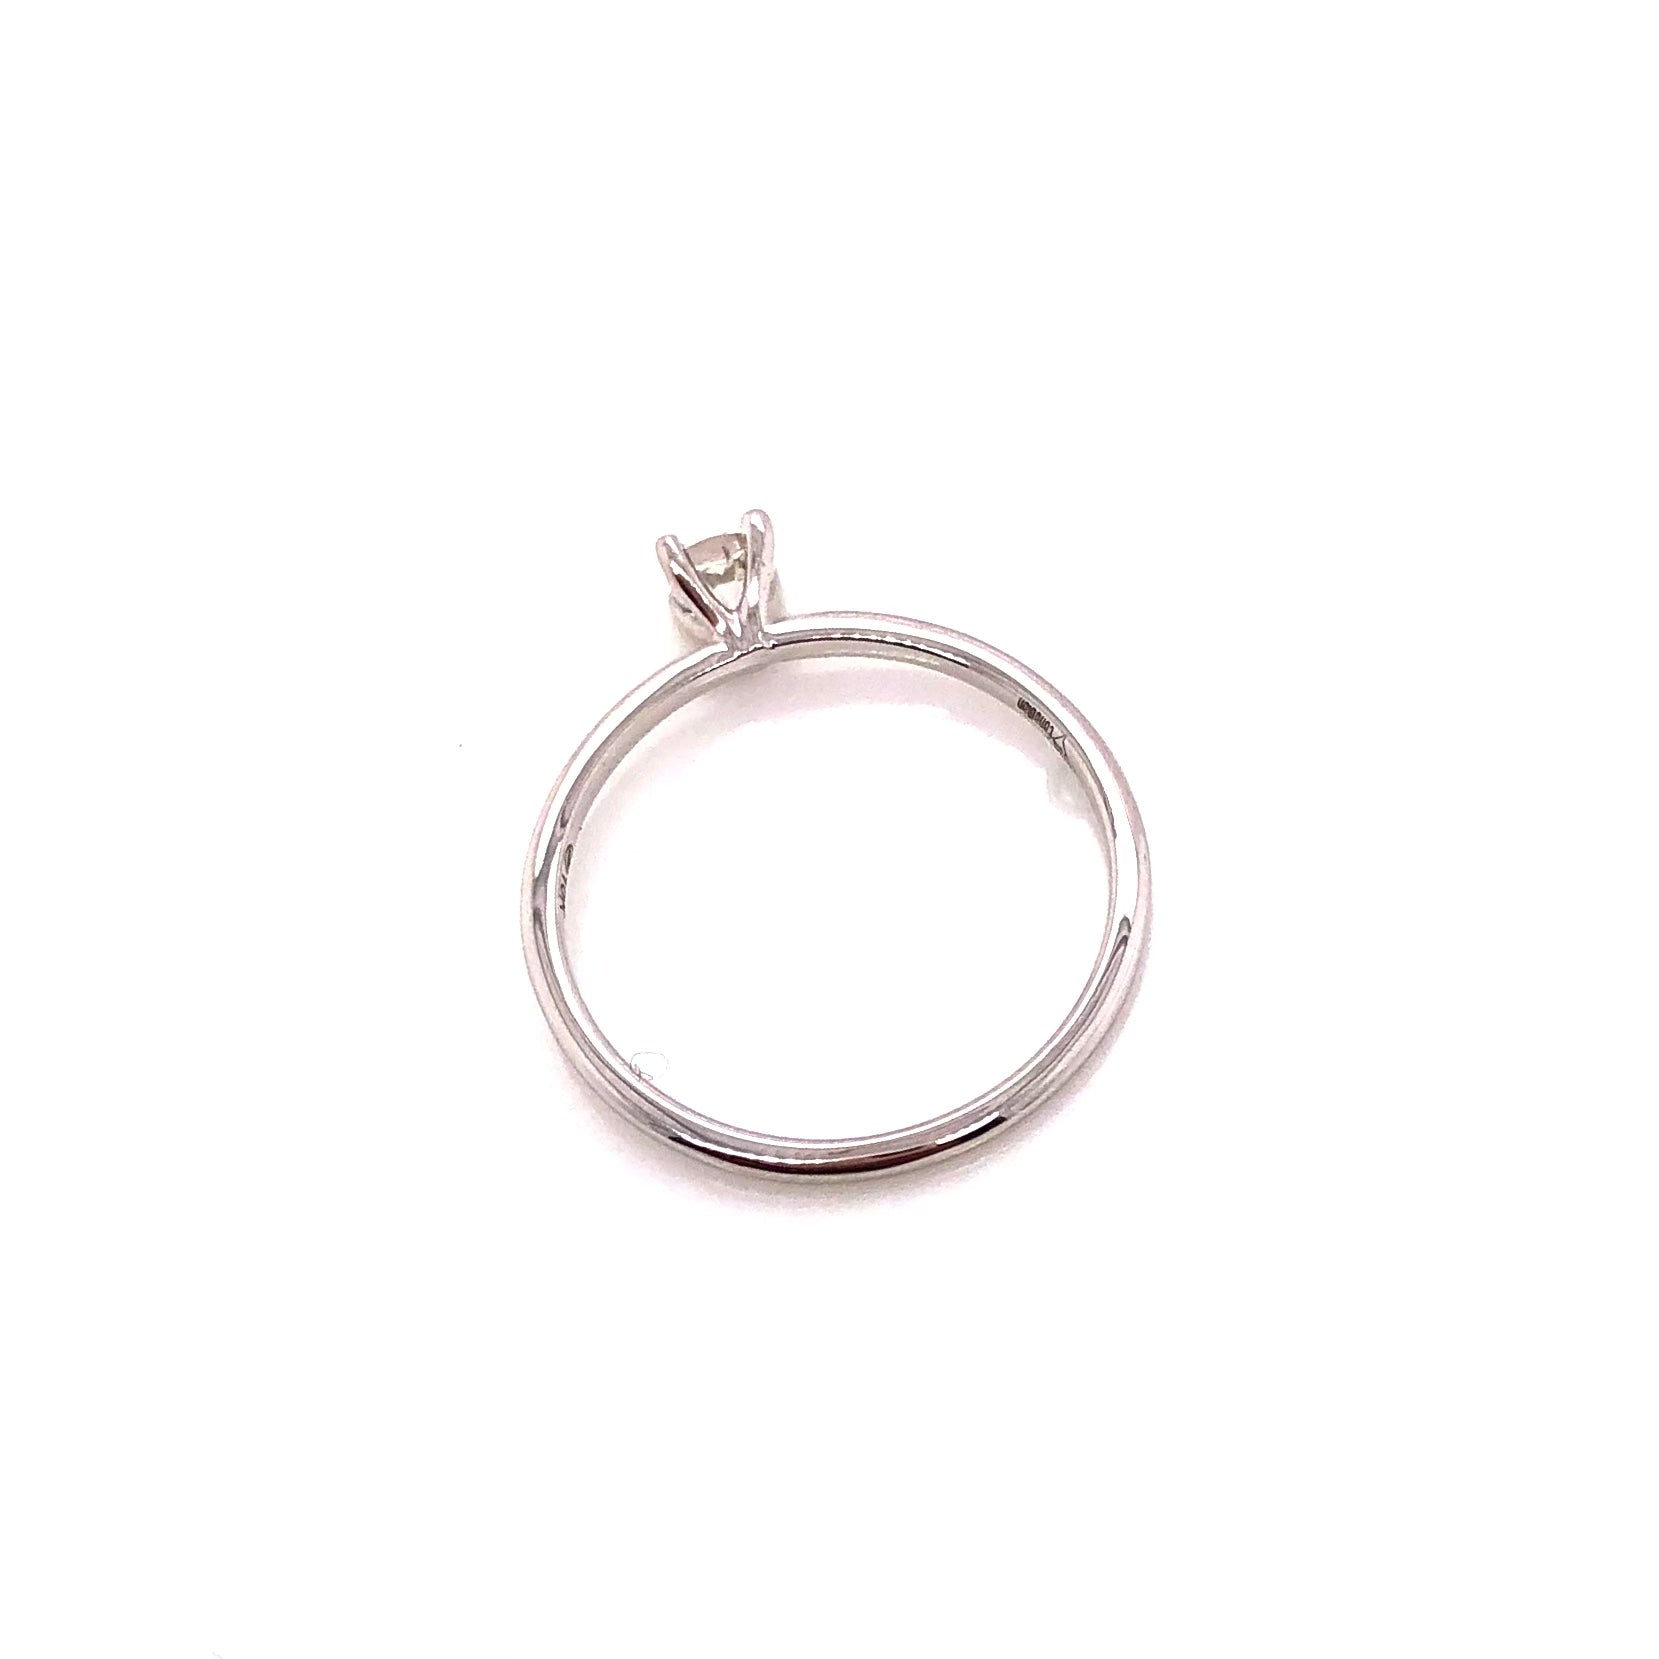 10K White Gold Delicate Cushion Cut Diamond Engagement Ring